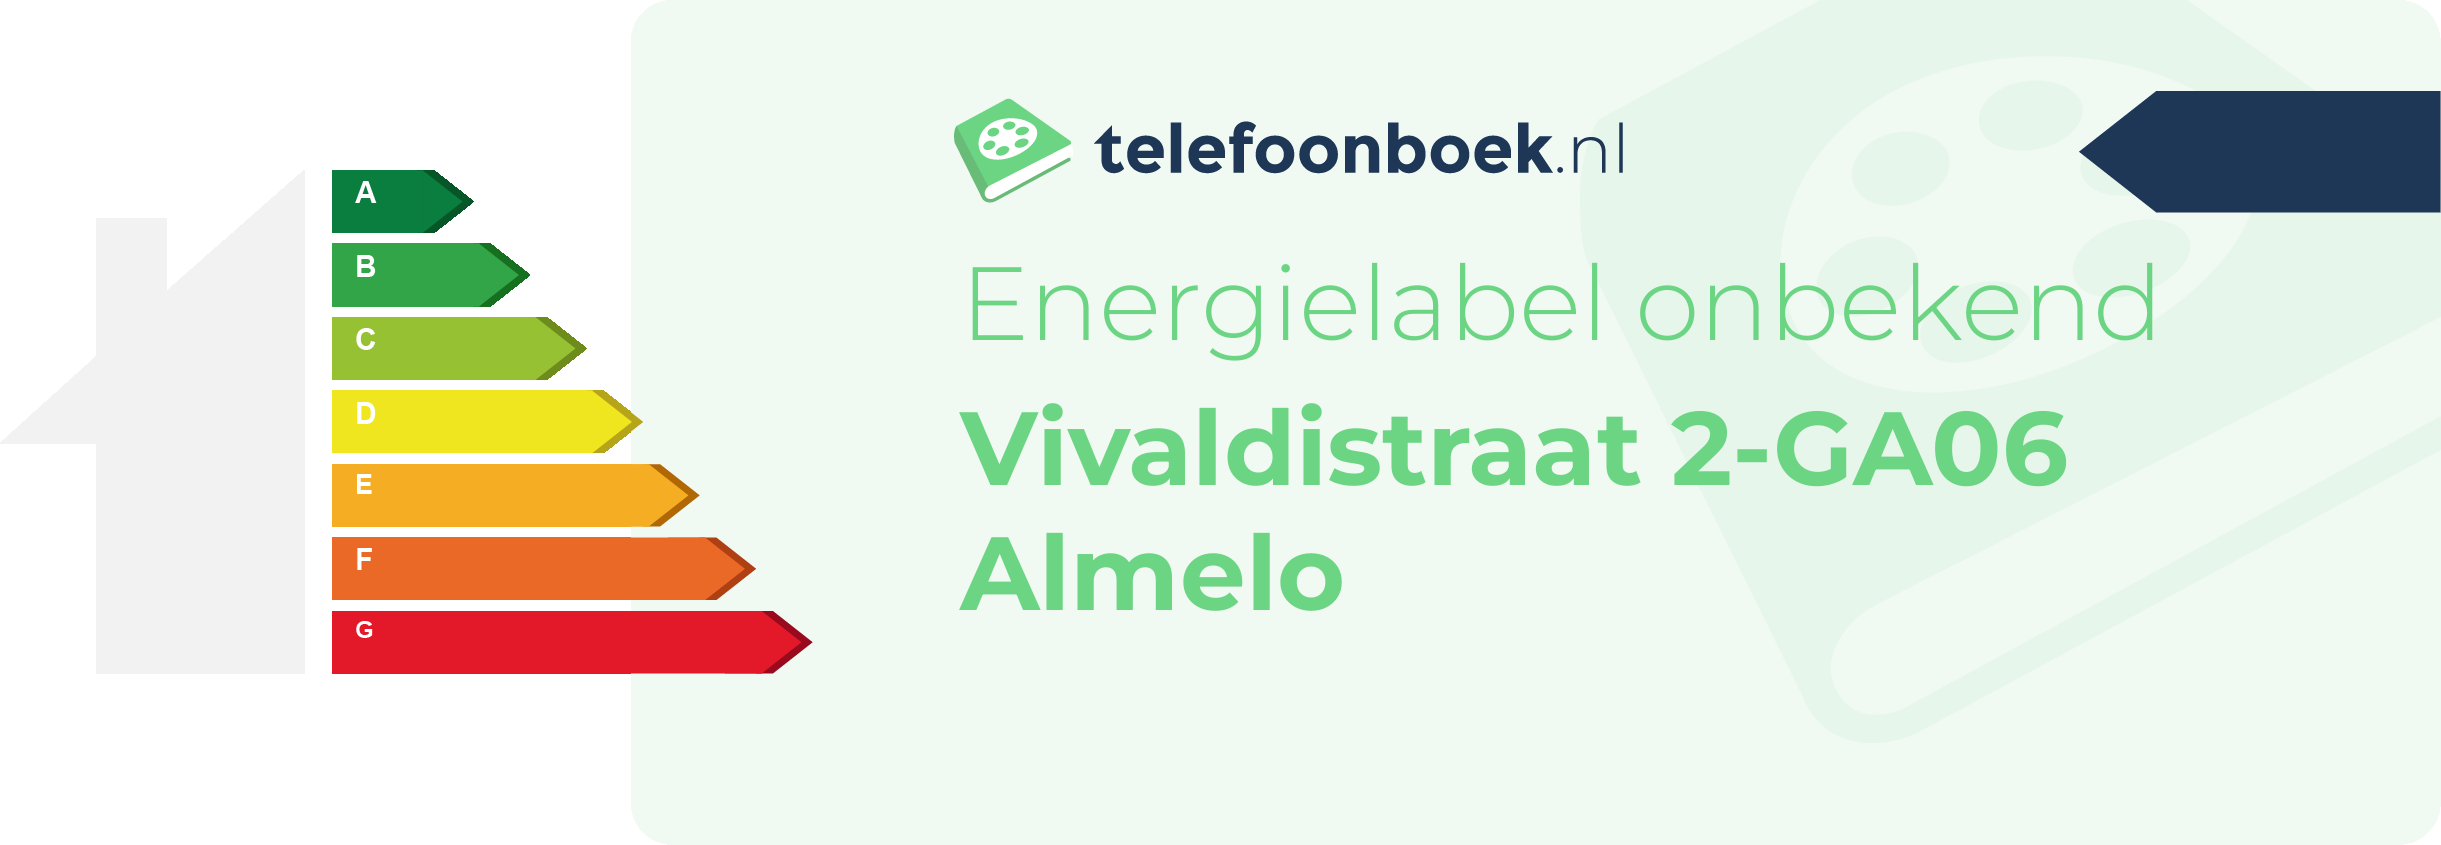 Energielabel Vivaldistraat 2-GA06 Almelo